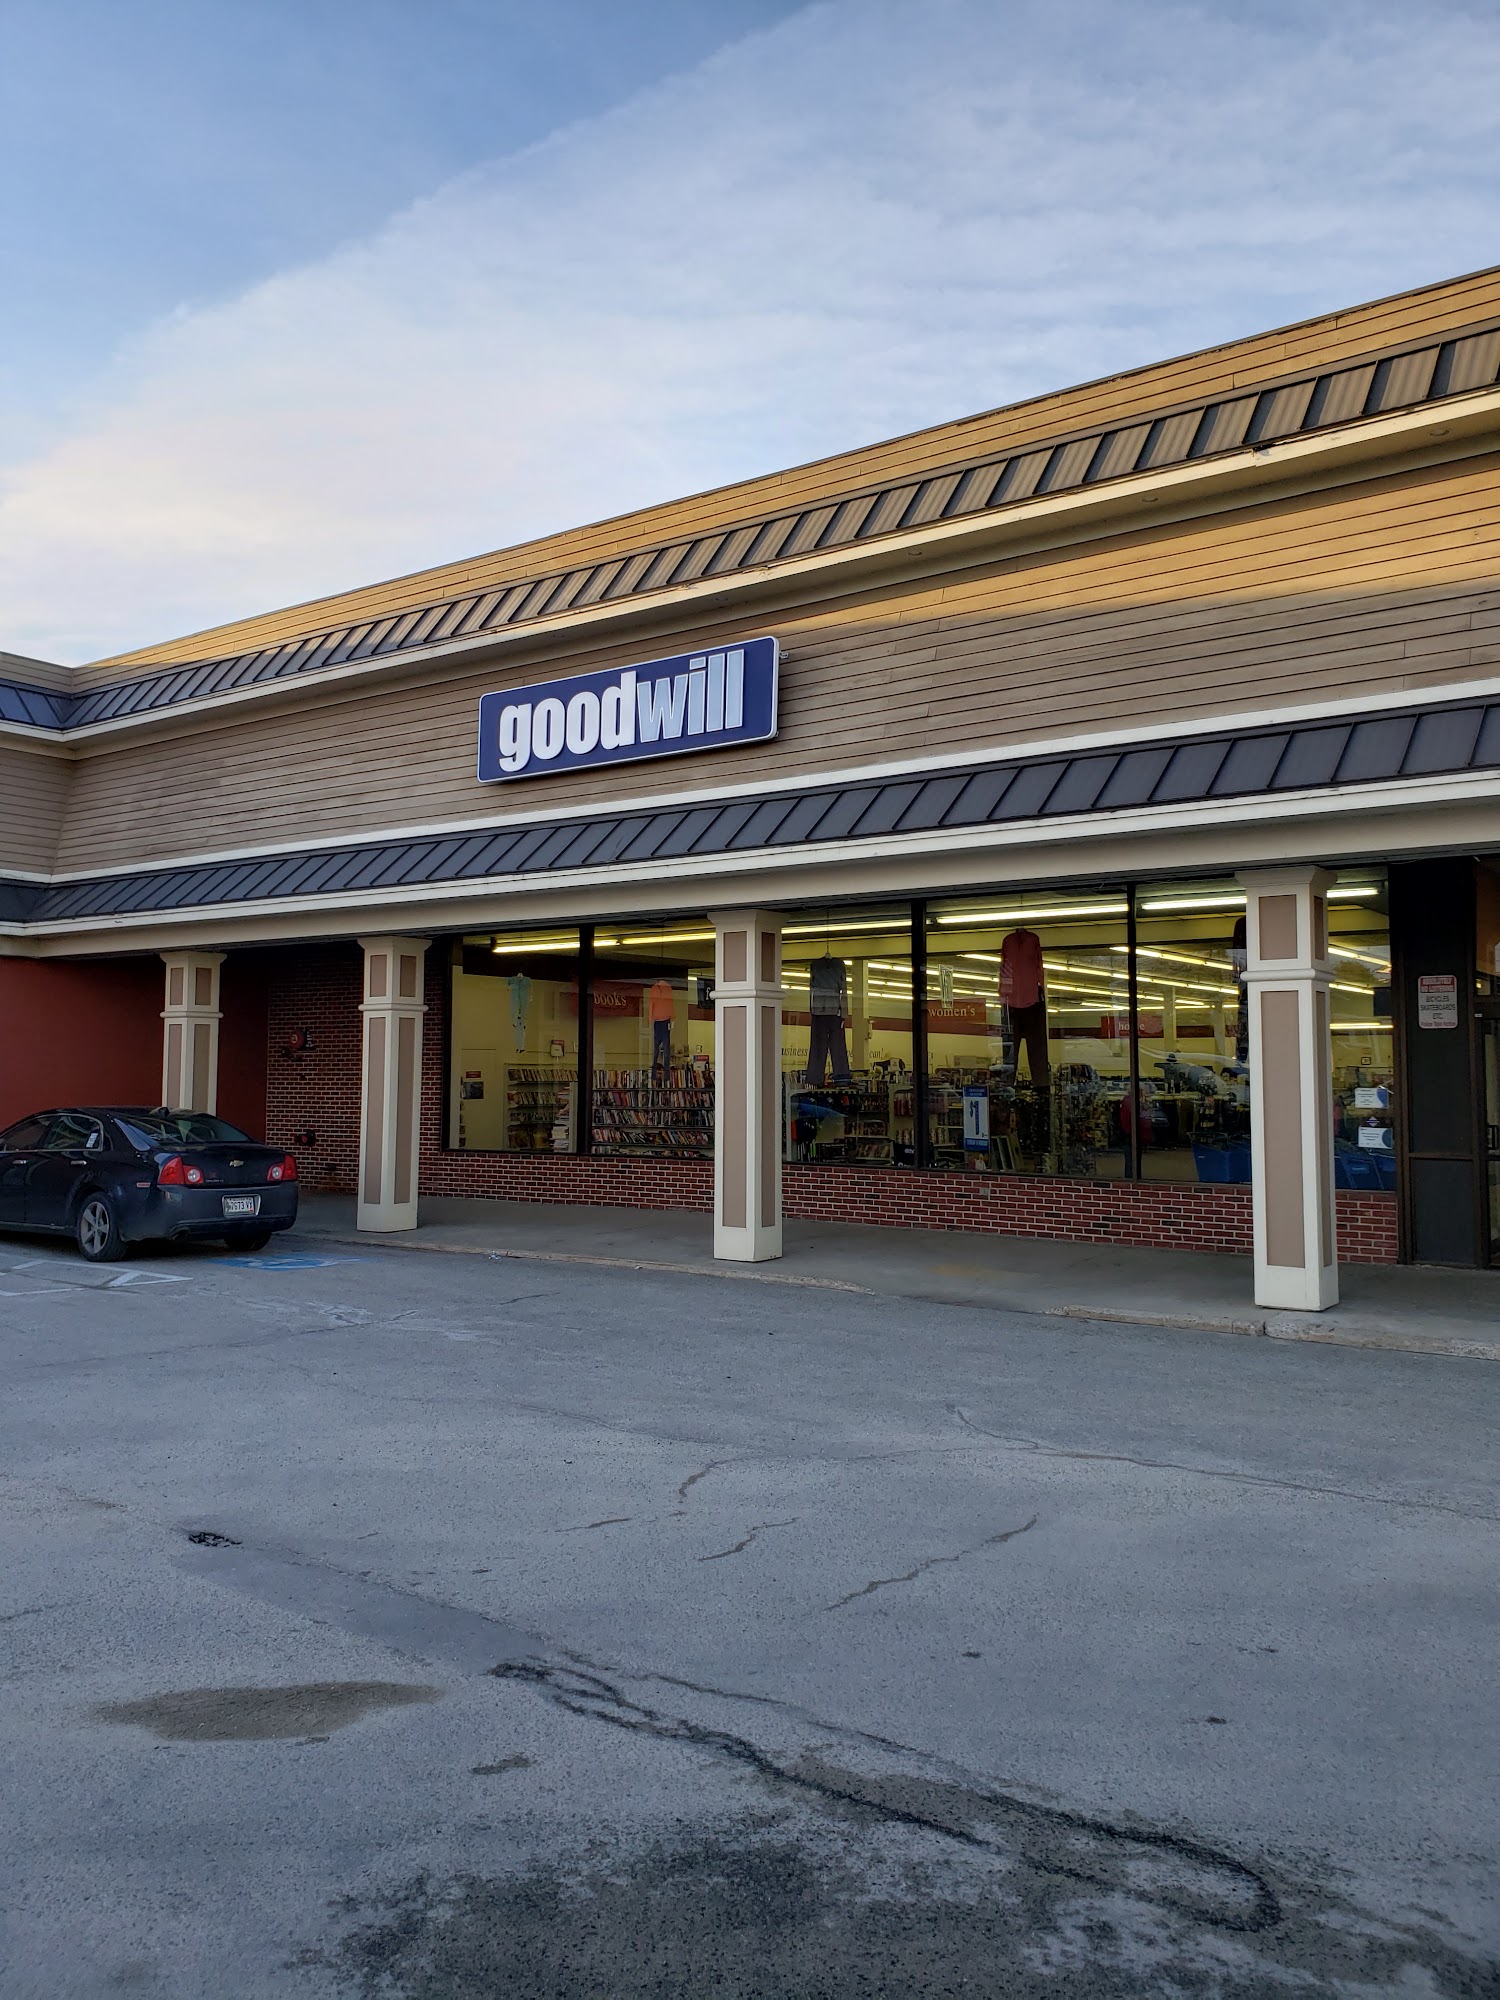 Goodwill Store: Gorham, ME